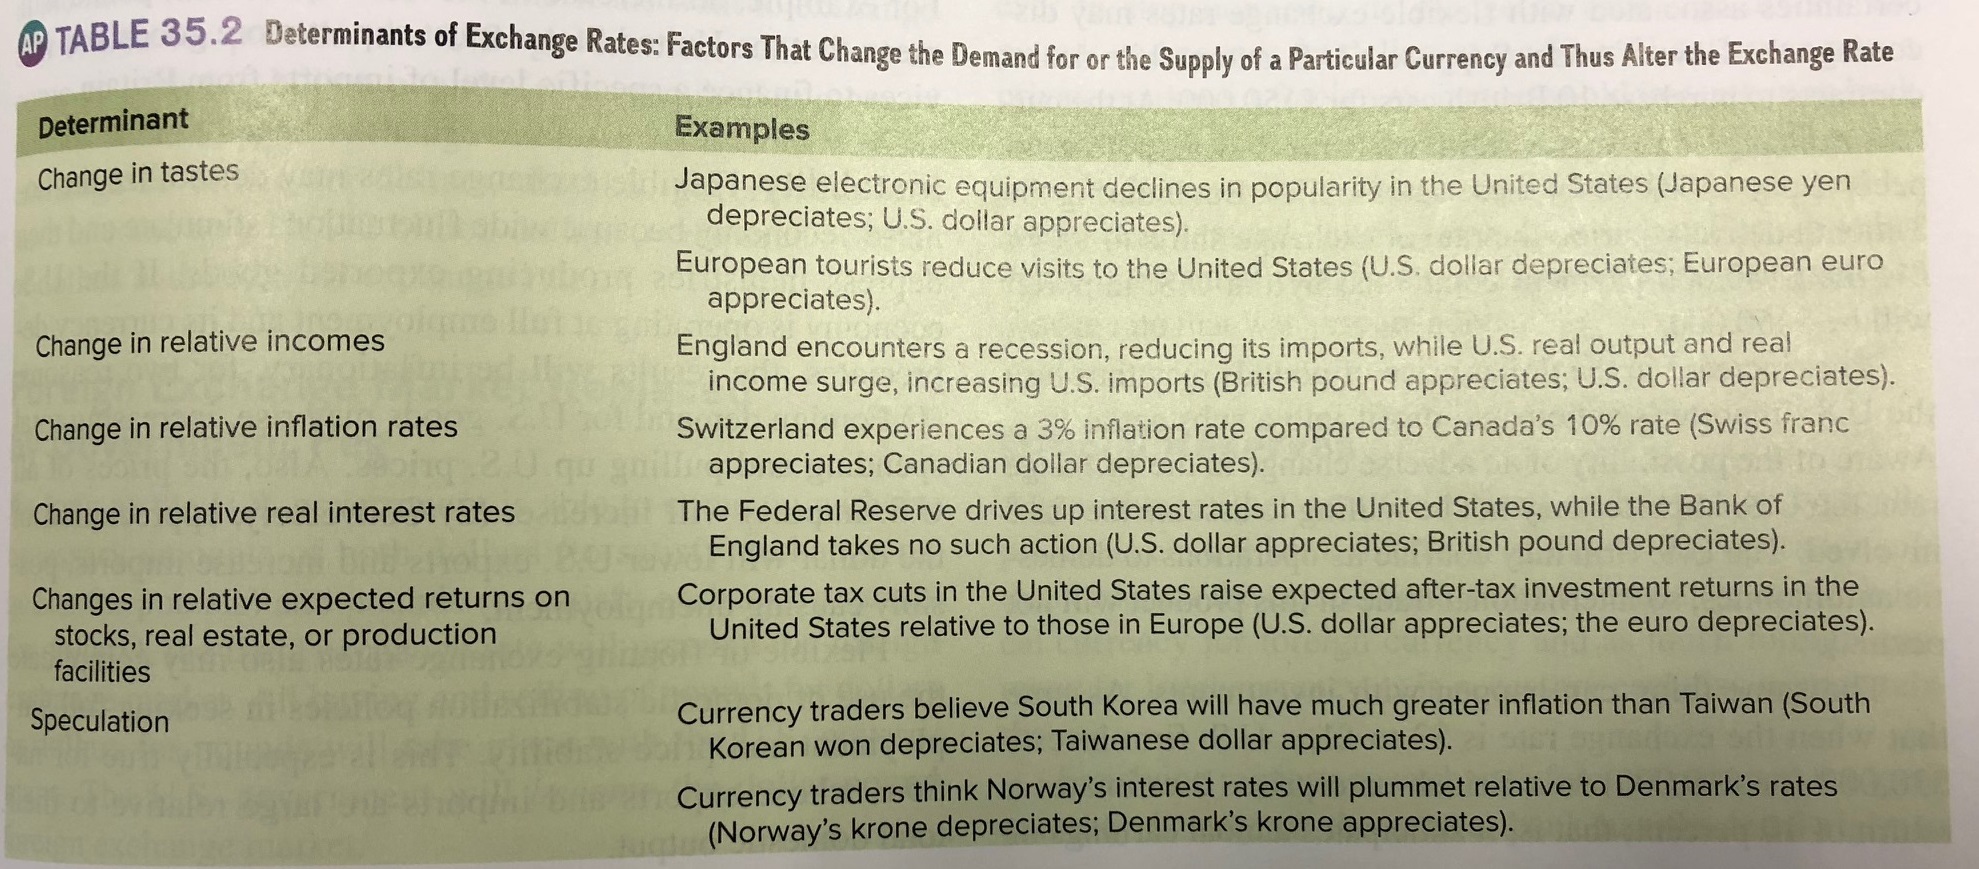 Exchange Rate Determinants